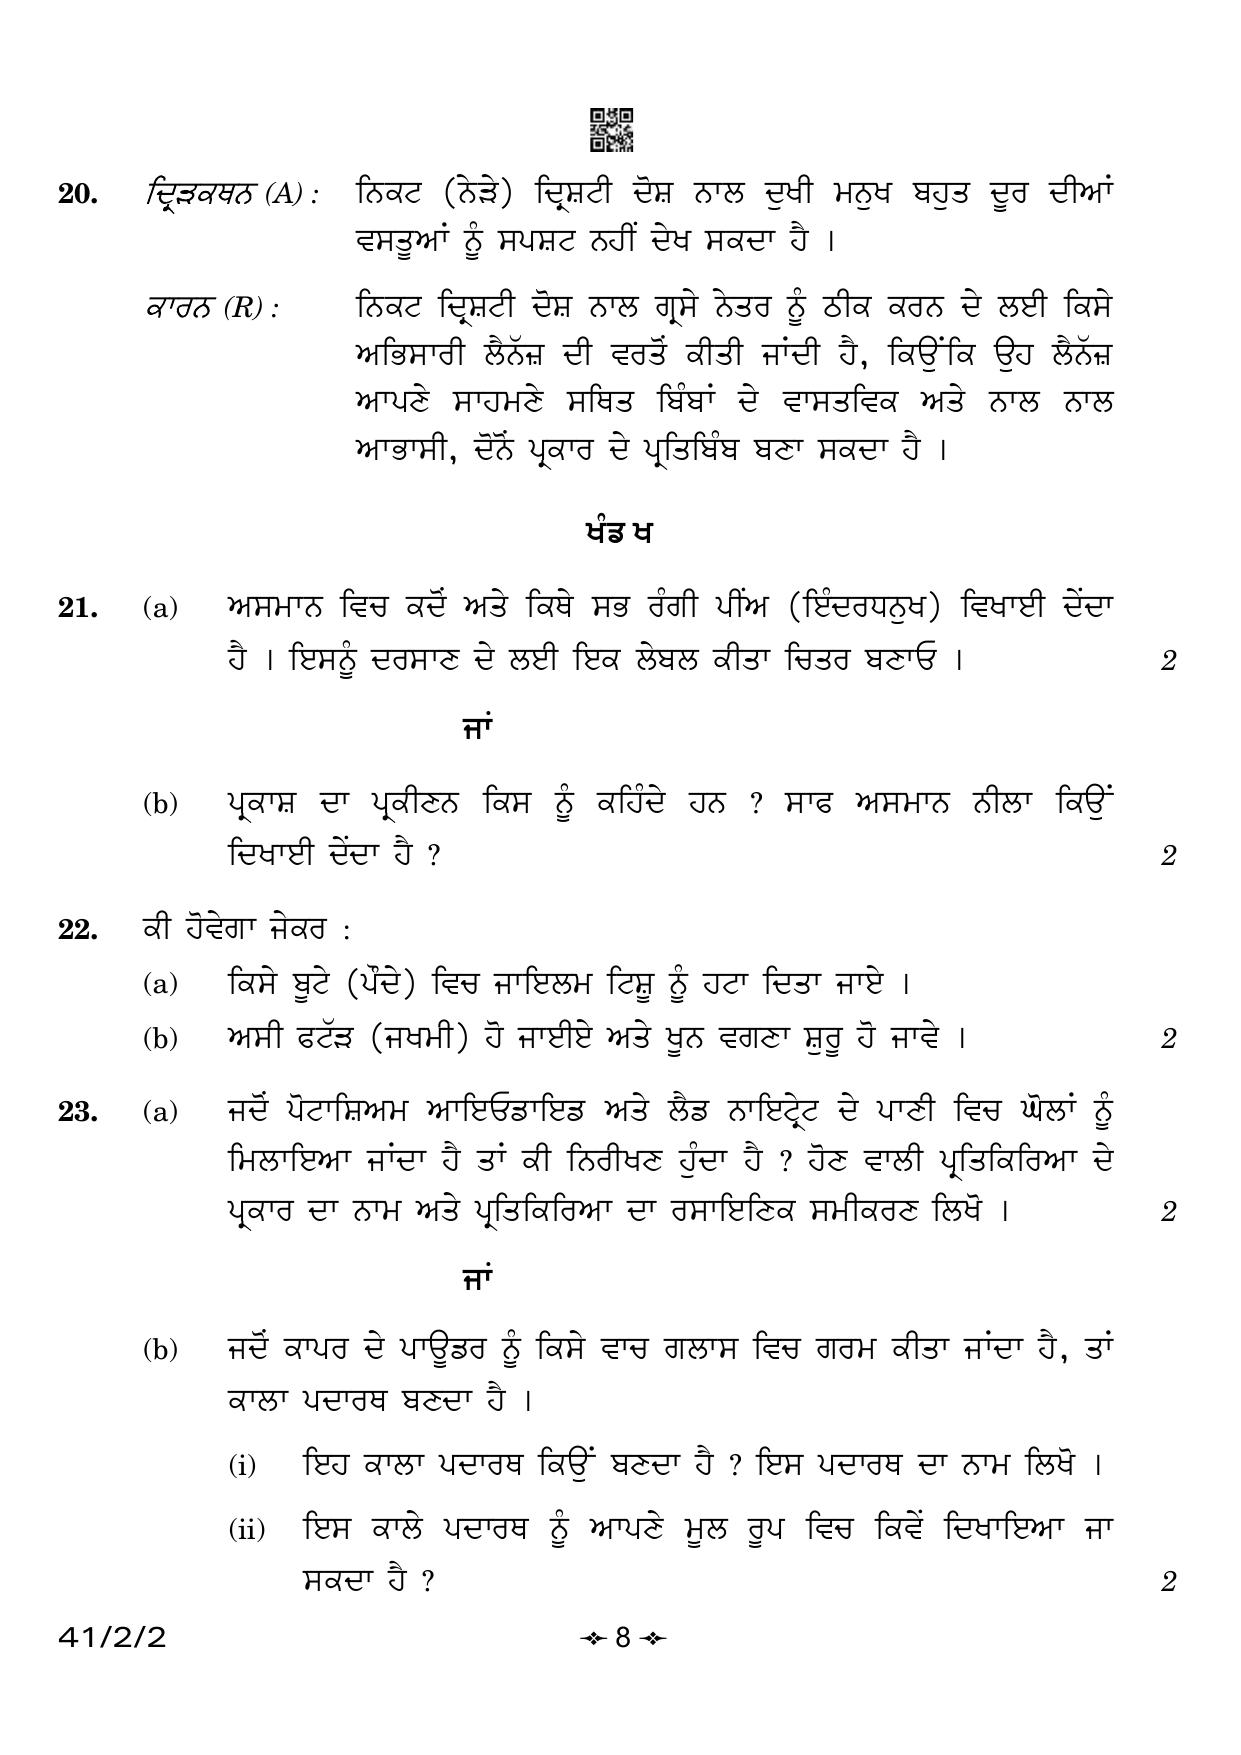 CBSE Class 10 41-2-2 Science Punjabi Version 2023 Question Paper - Page 8